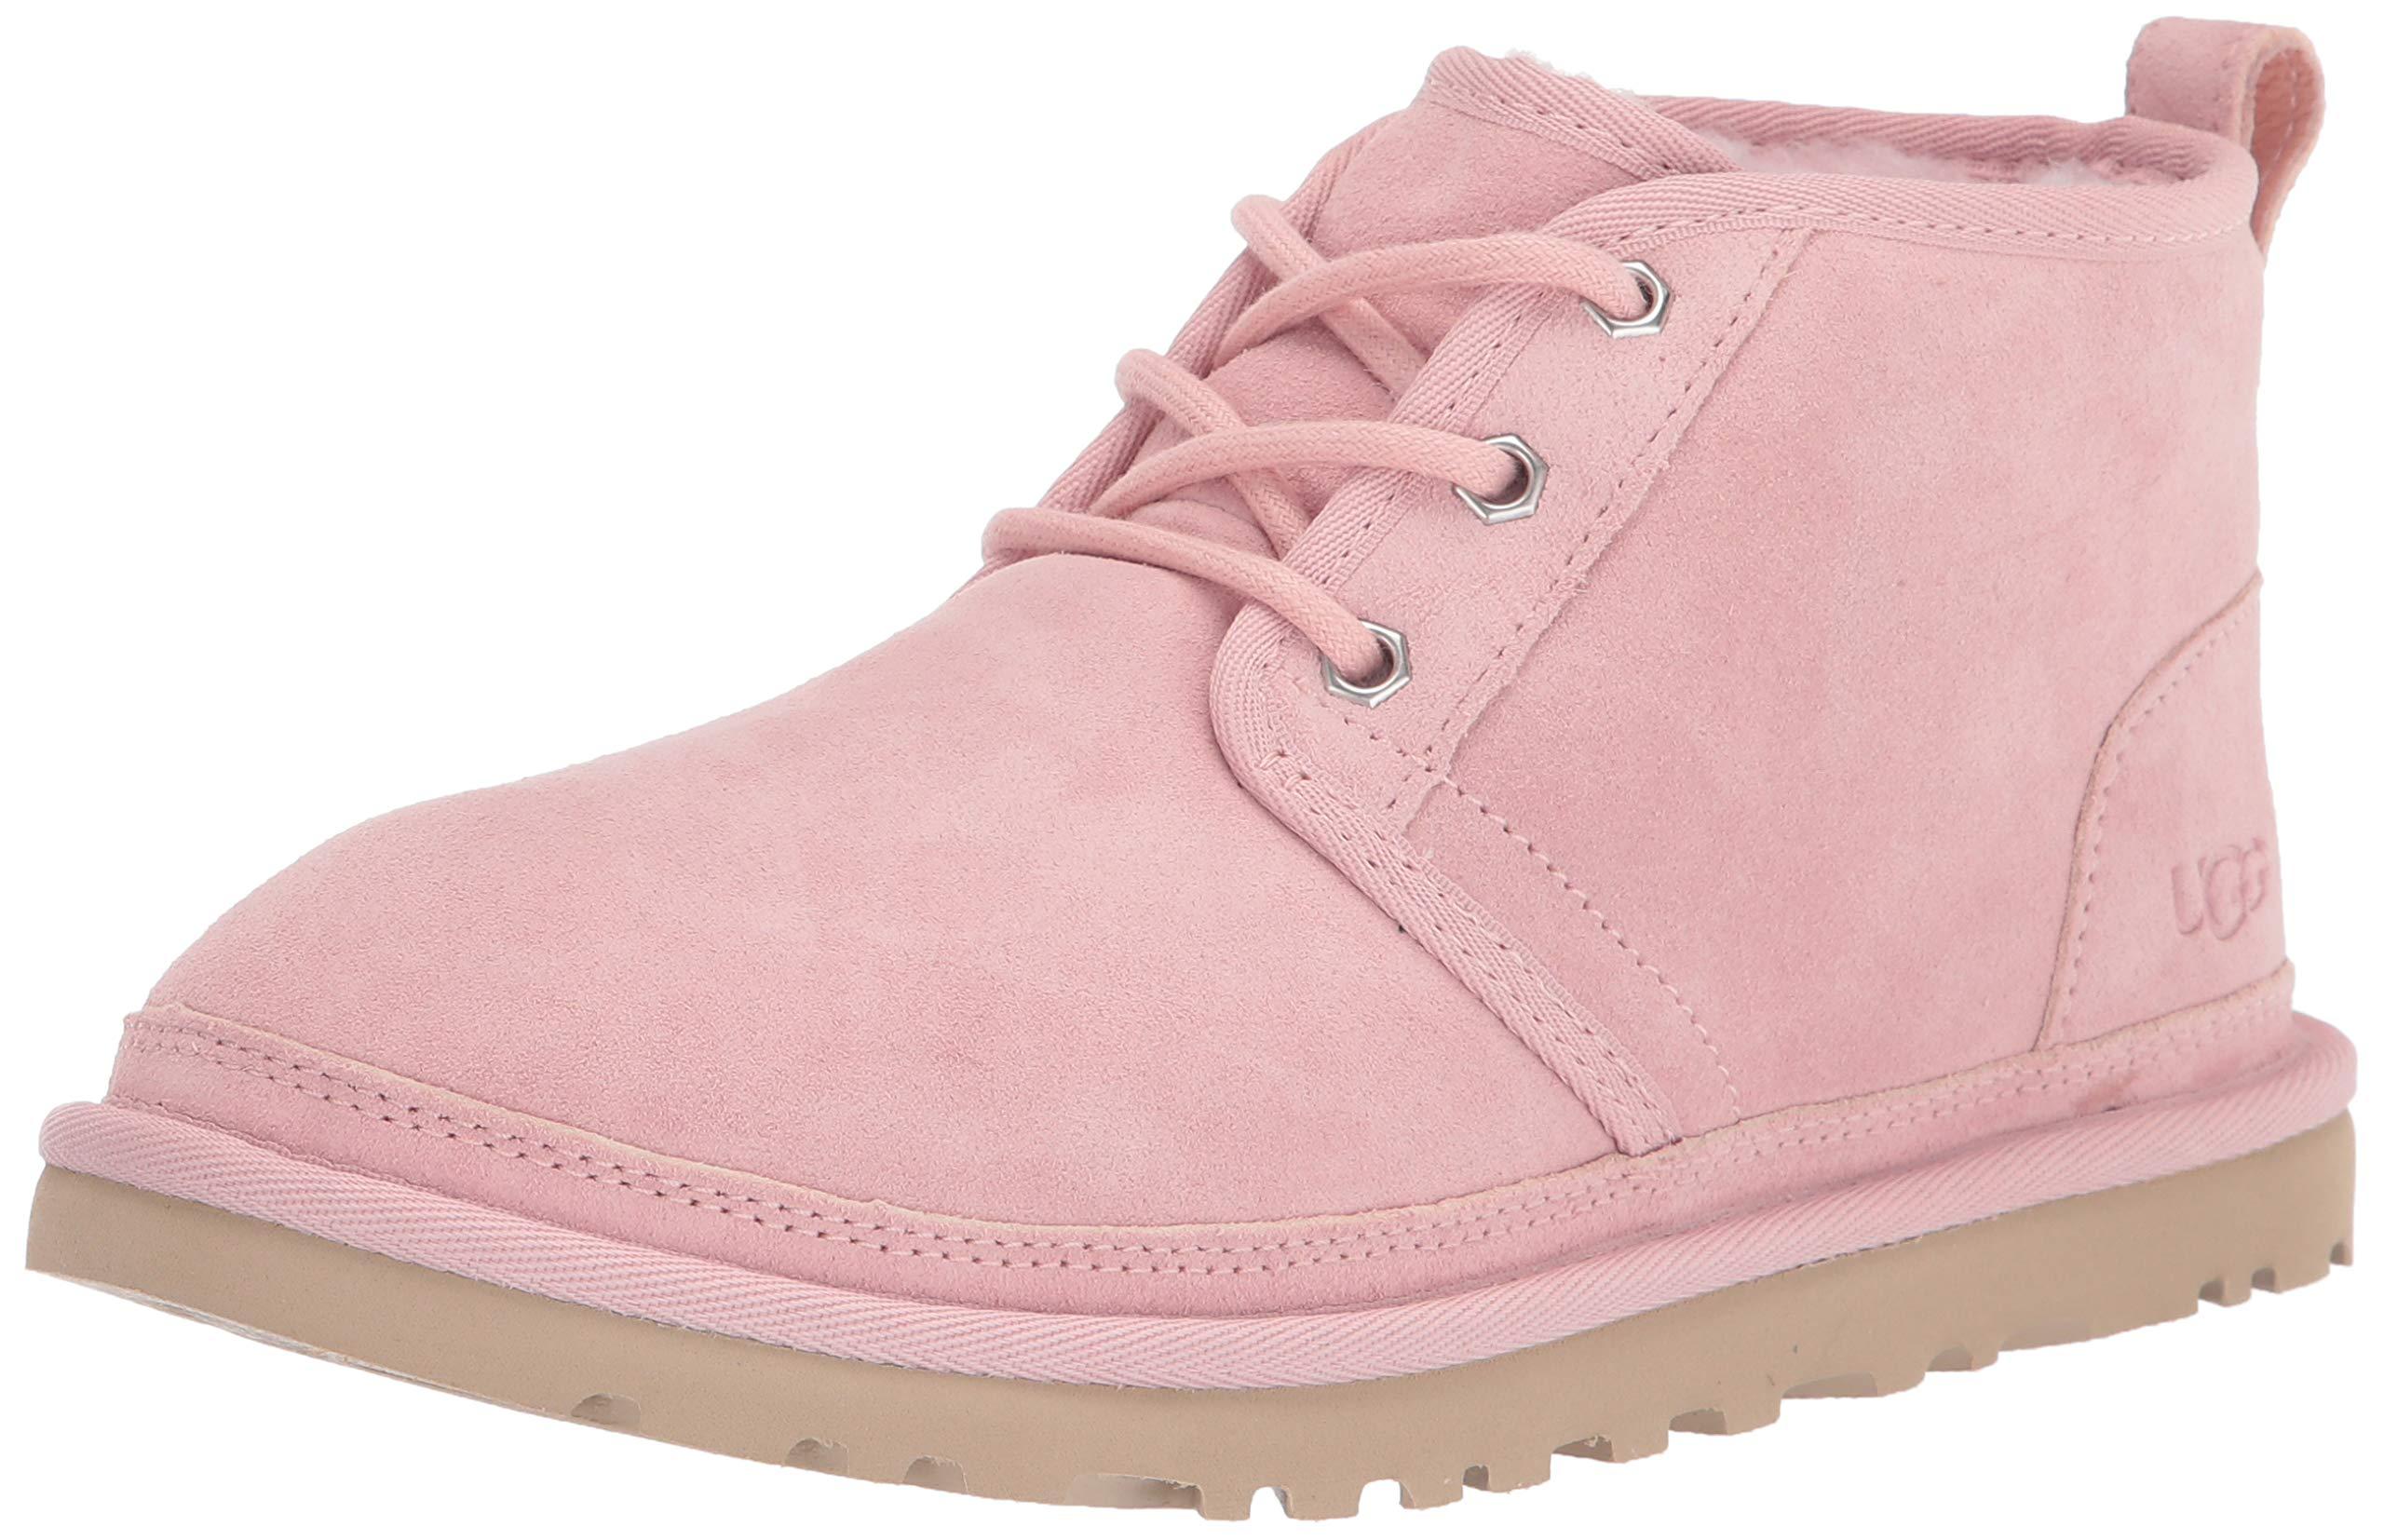 neumel boot pink